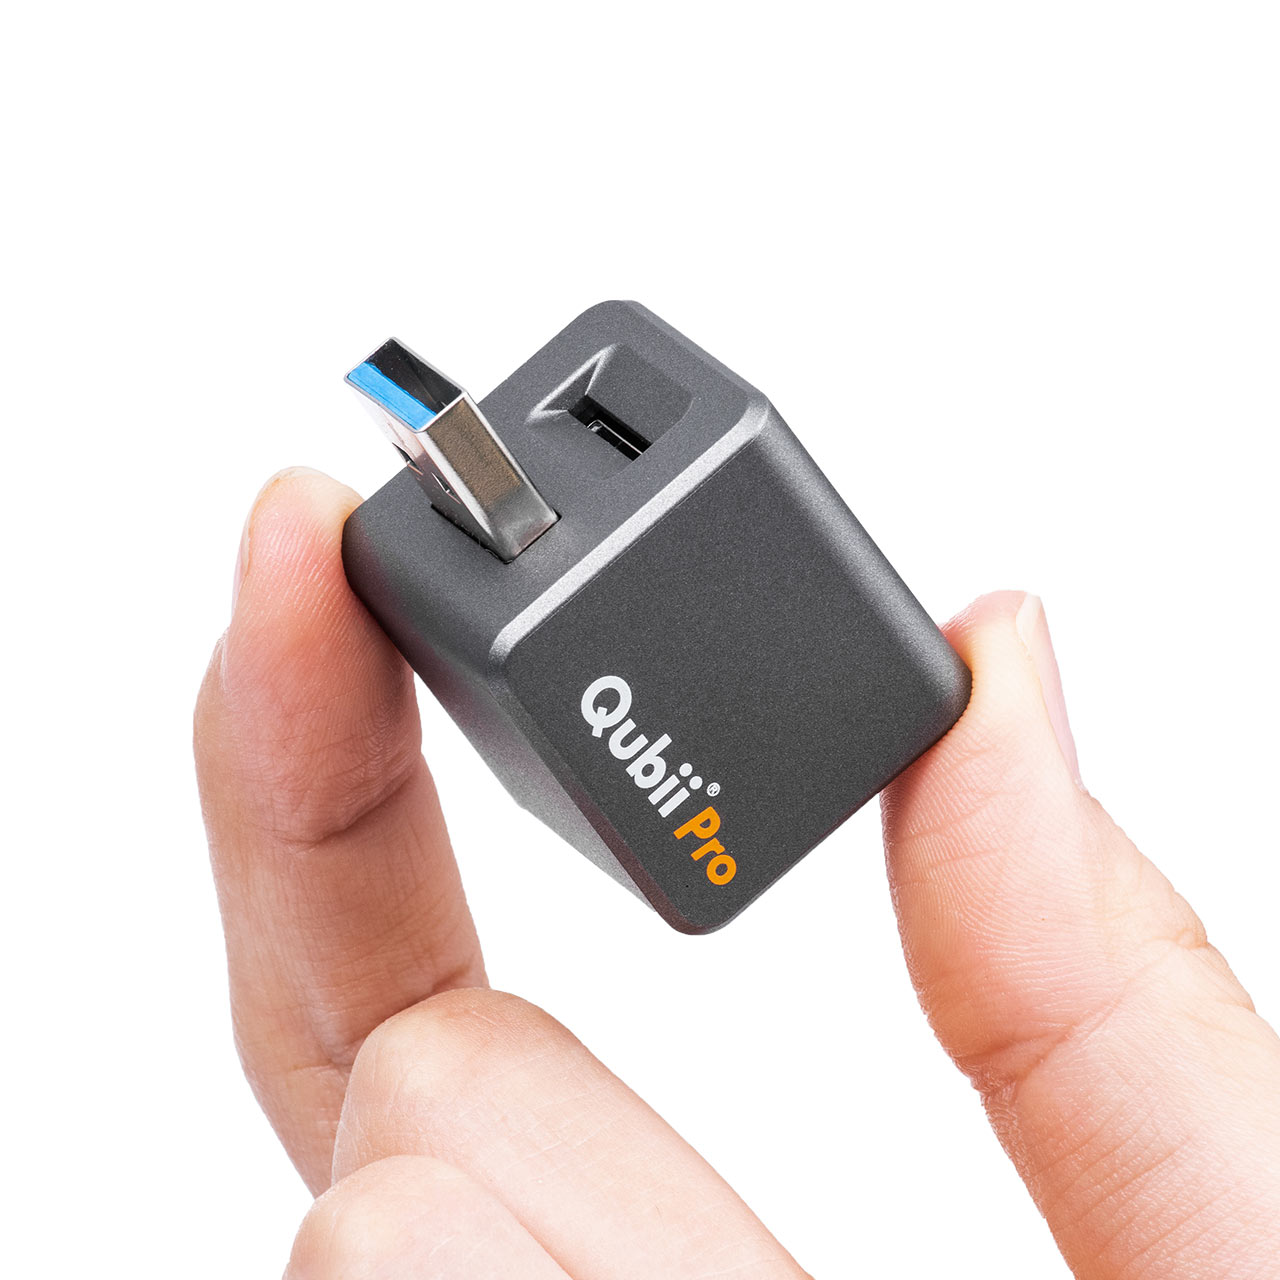 TS256GUSD300S-A付き】Qubii Pro グレー microSDカード(256GB)セット 